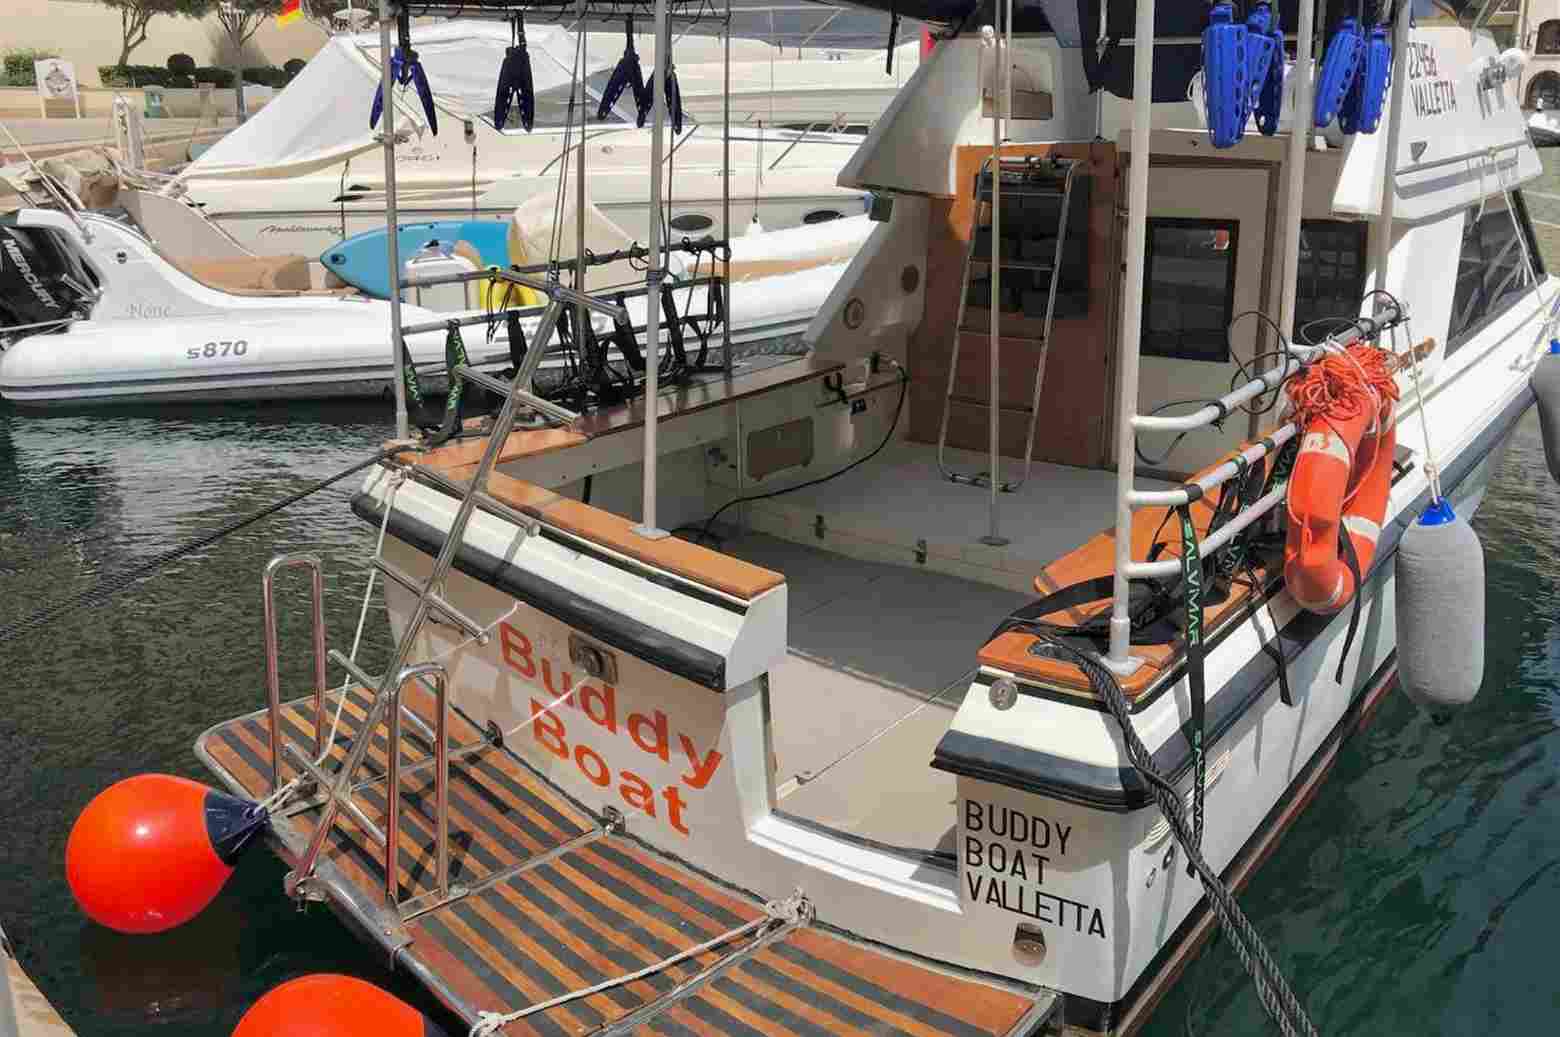 Buddy Boat - Yacht & Boat Rental & Charter